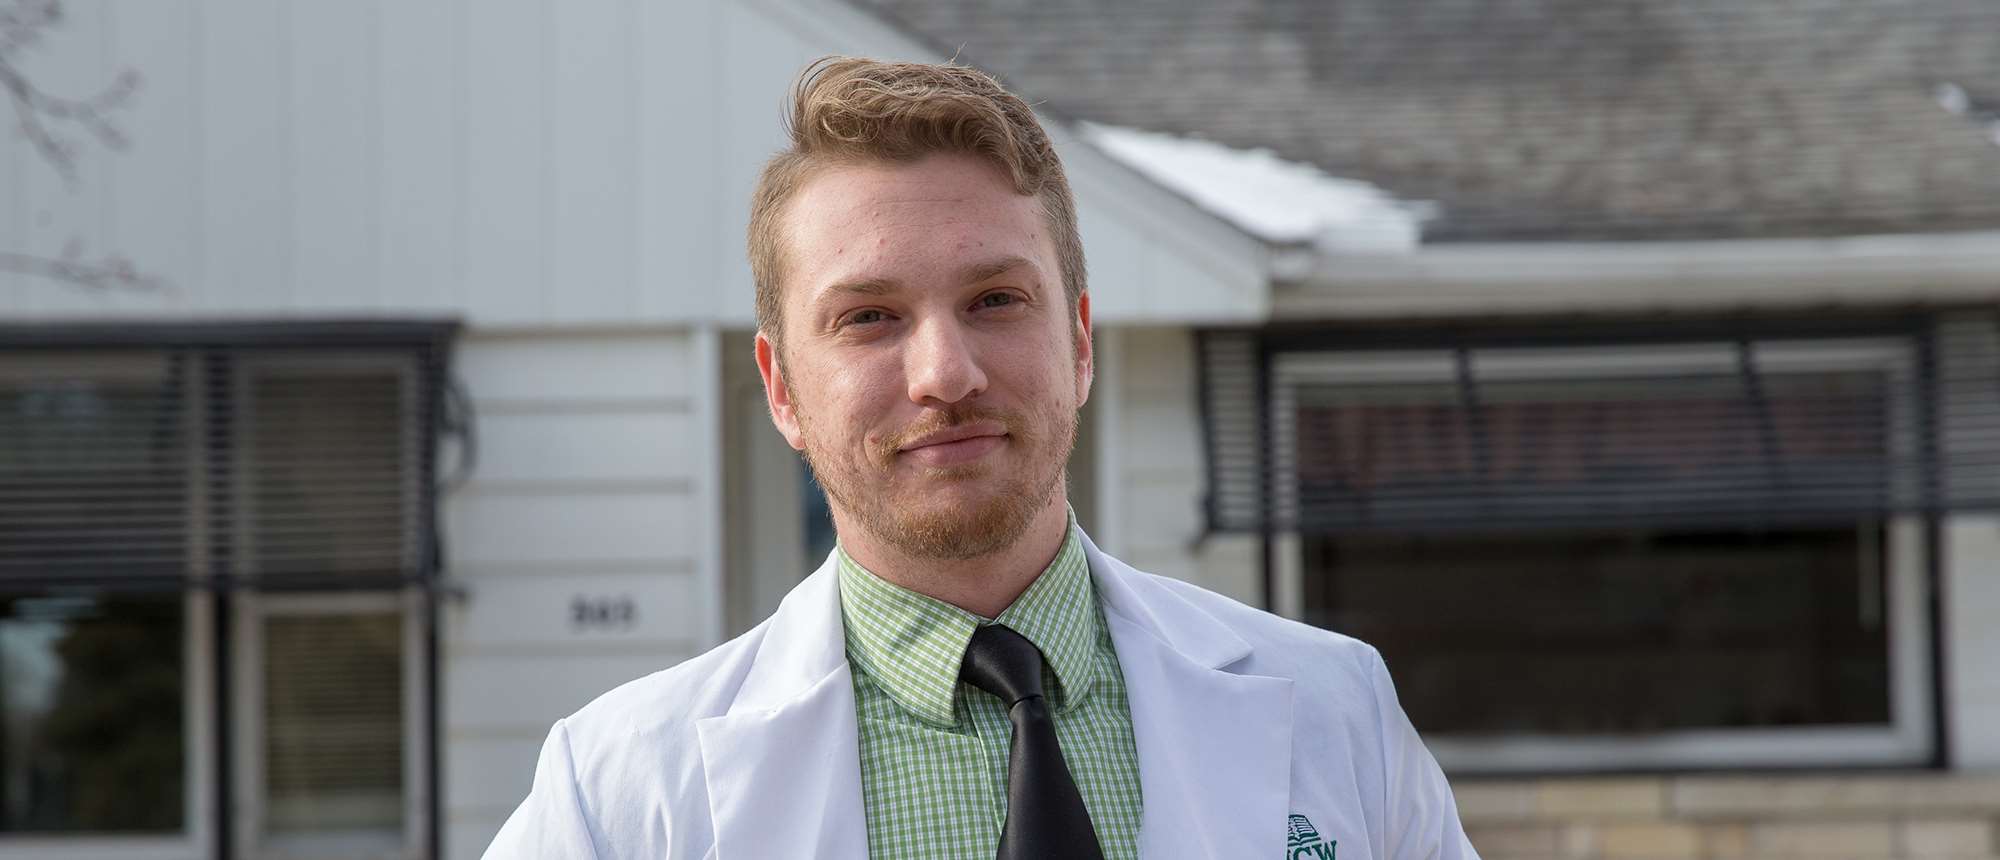 Gunnar Whealy, MCW medical student